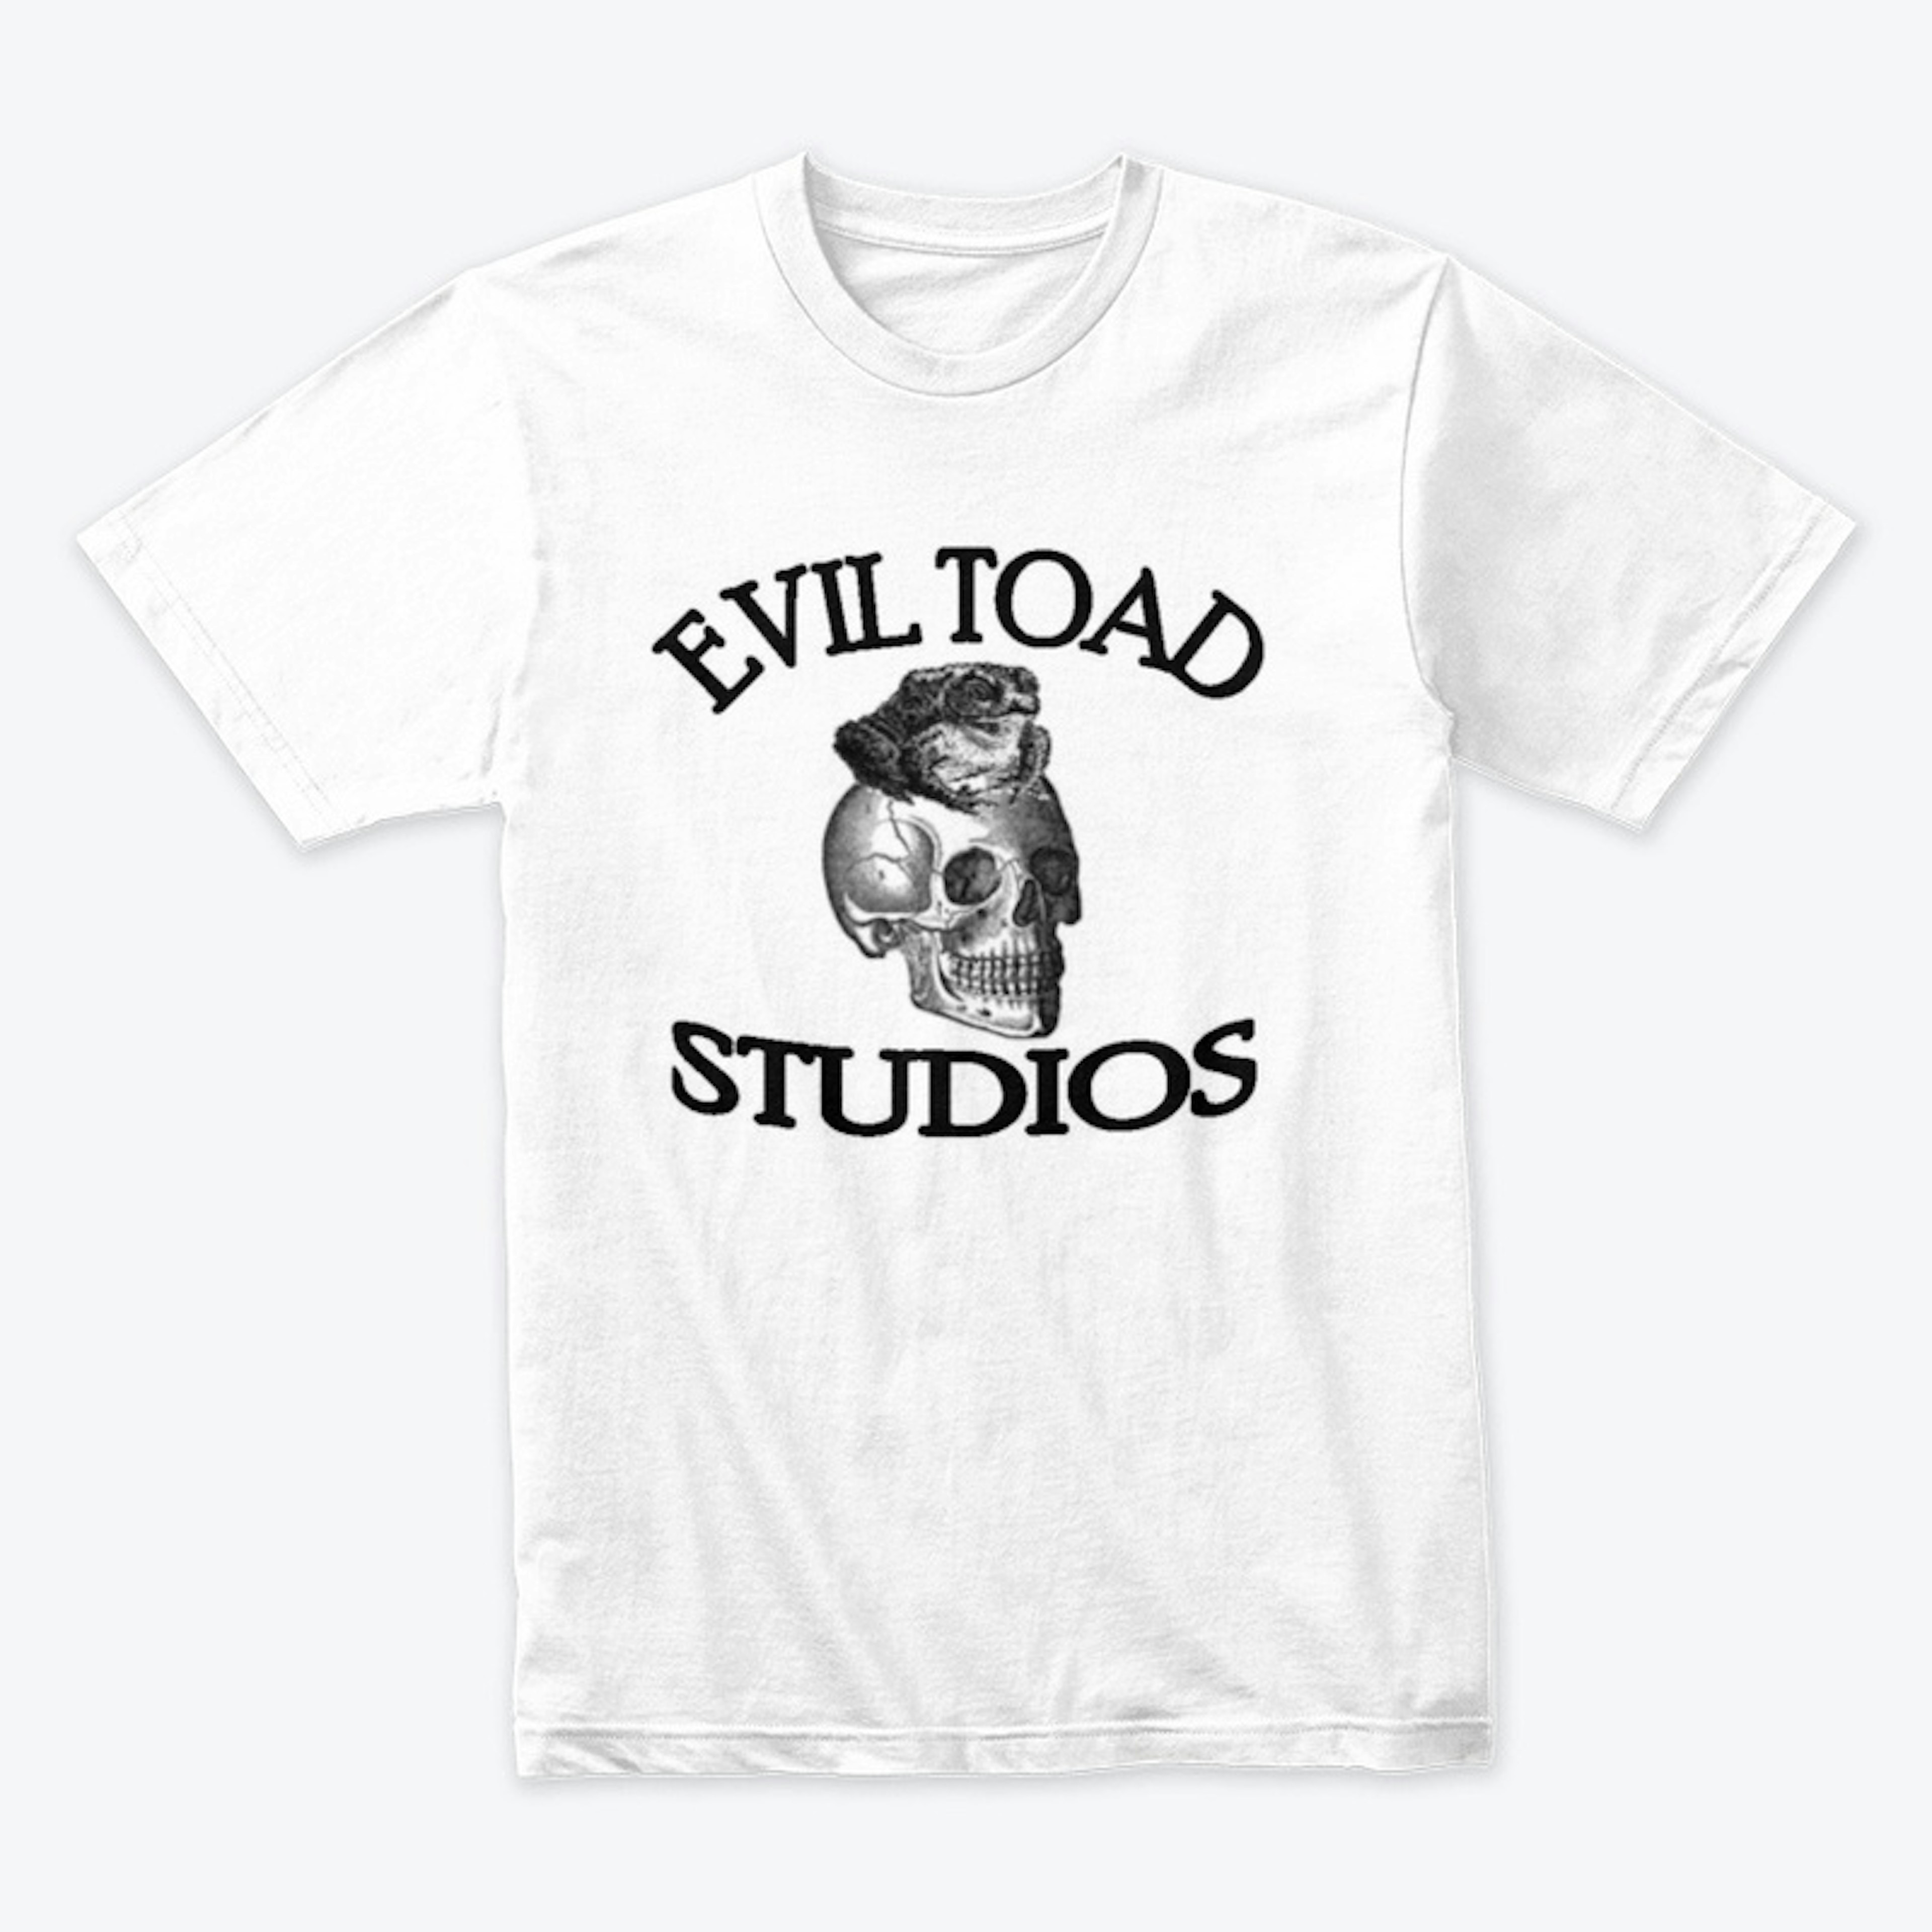  EvilToad Studios LOGO White